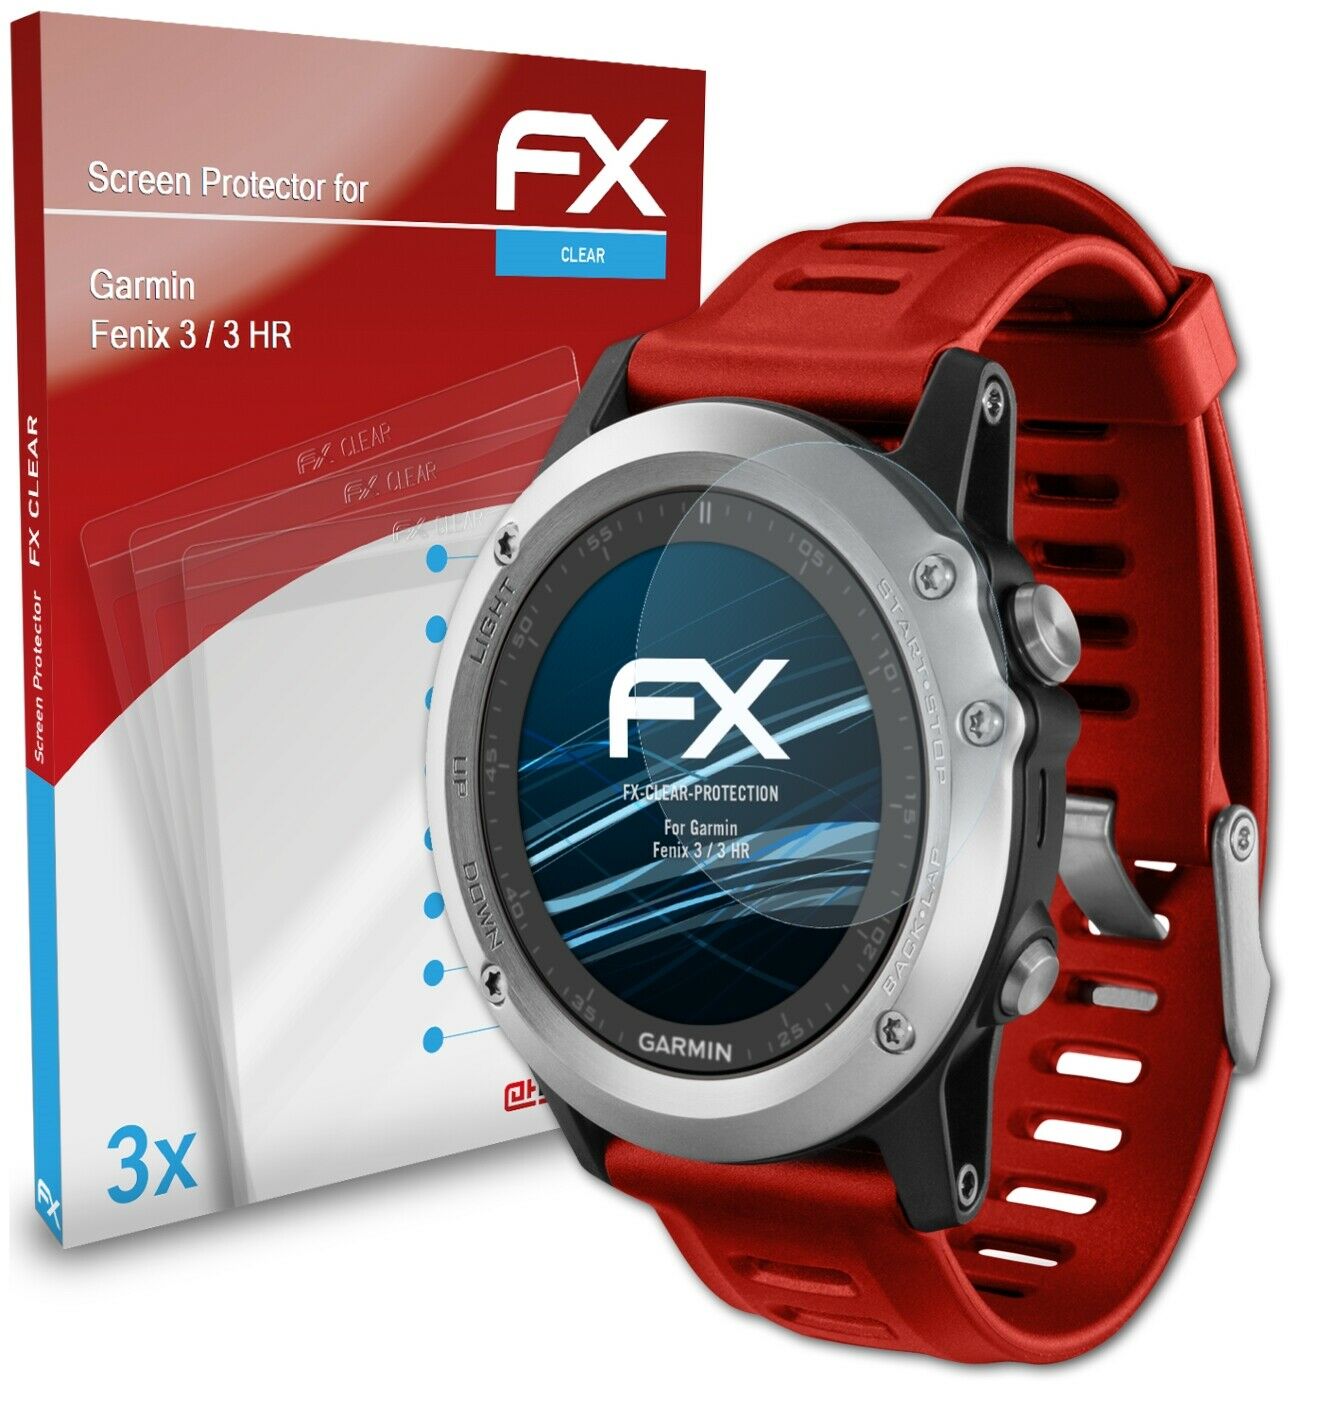 atFoliX 3x Screen Protector for Garmin Fenix 3 / 3 HR clear